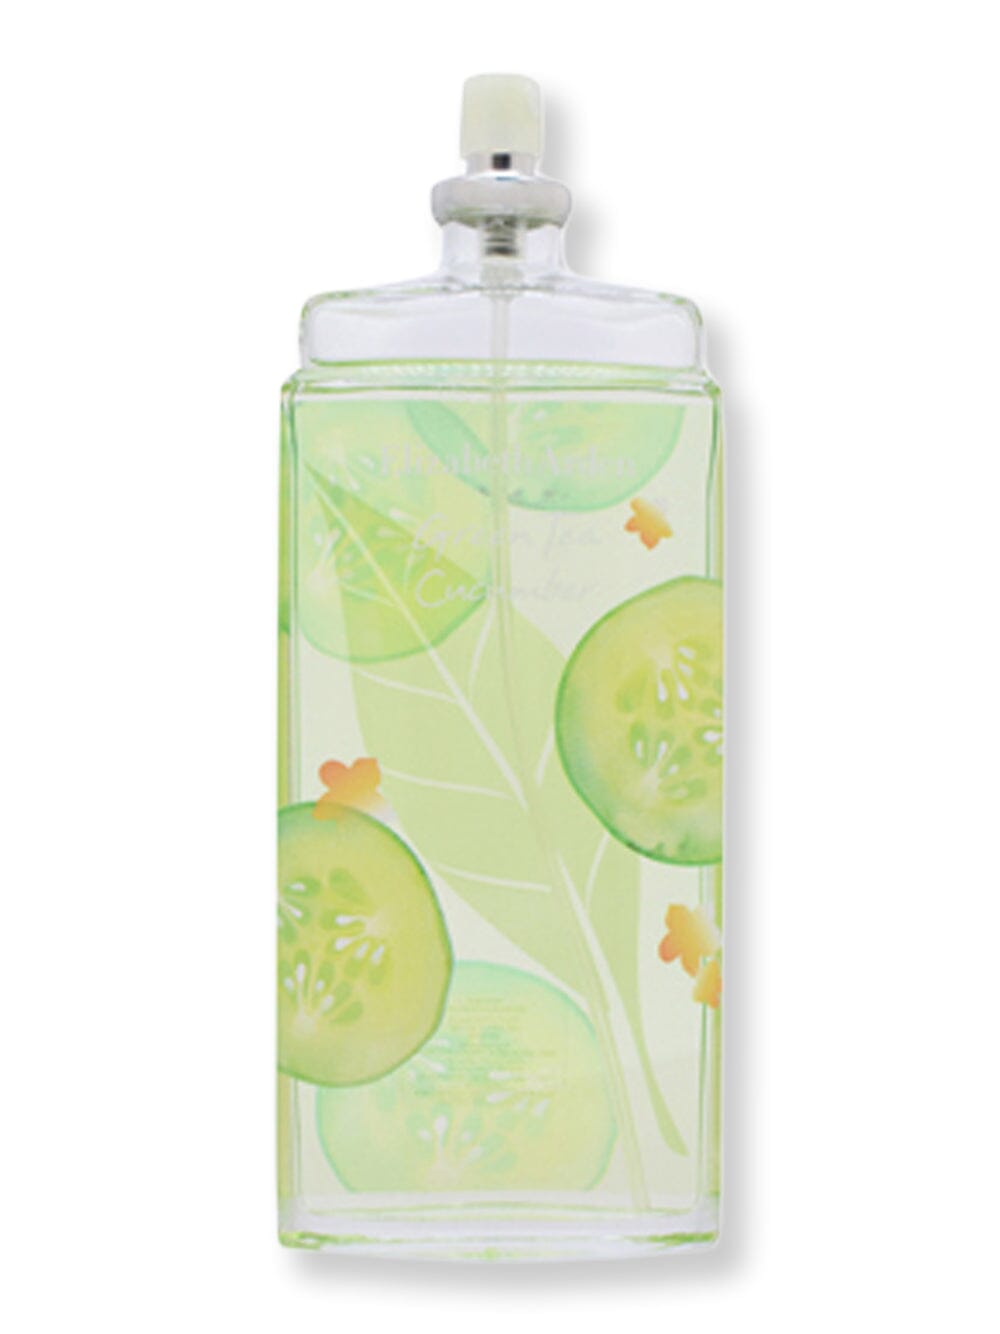 Elizabeth Arden Elizabeth Arden Green Tea Cucumber EDT Spray Tester 3.3 oz100 ml Perfume 